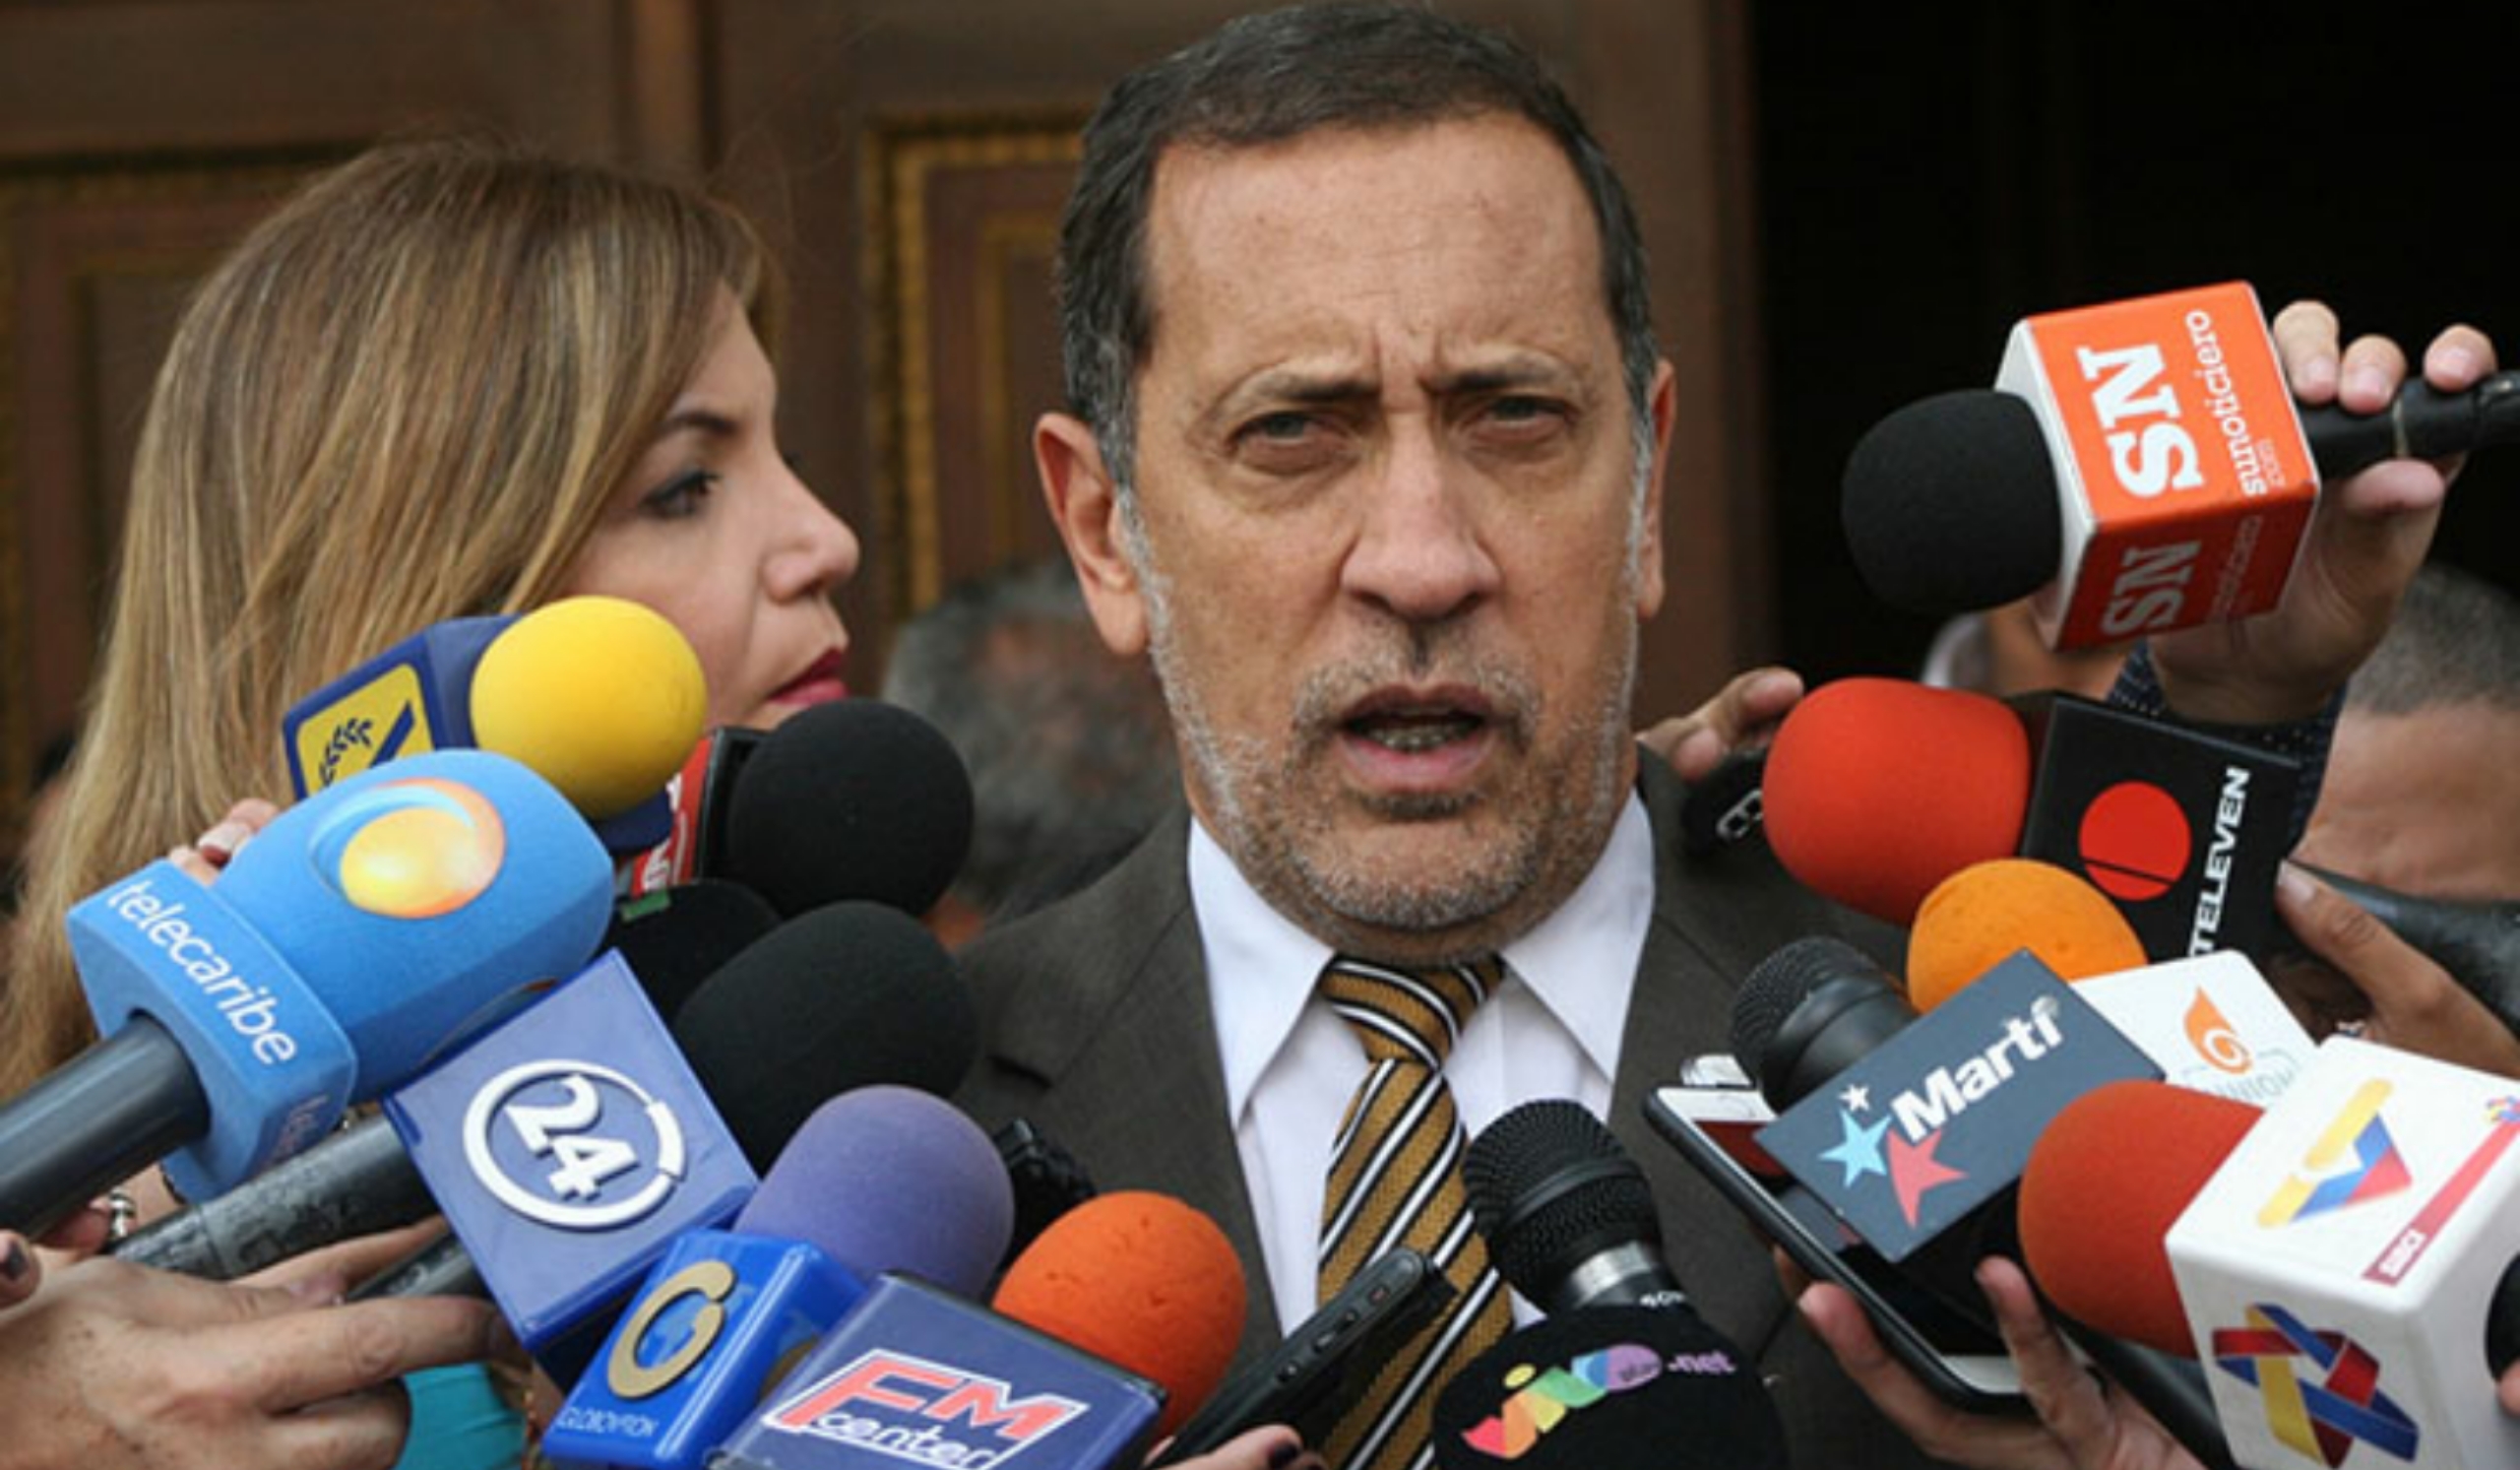 Dip. José Guerra alerta que el régimen intenta “comprar” a diputados opositores